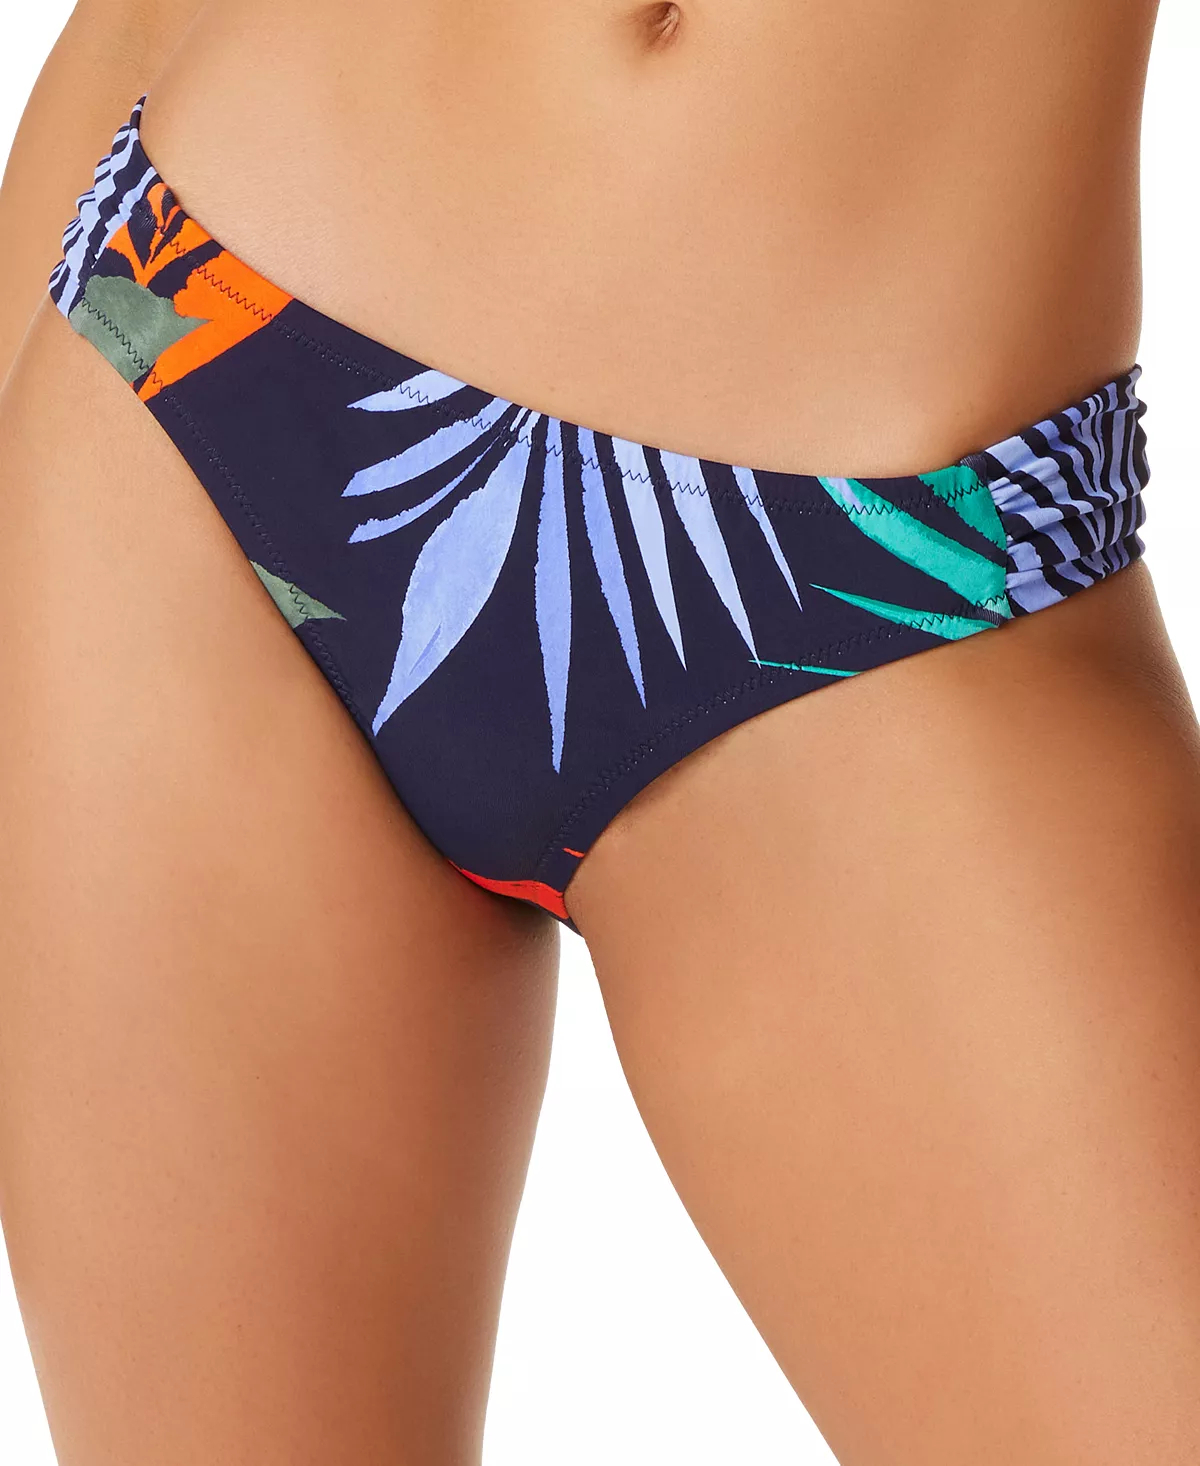 Primary image for JESSICA SIMPSON Bikini Swim Bottoms Side Shirred Navy Print Size Medium $48 -NWT